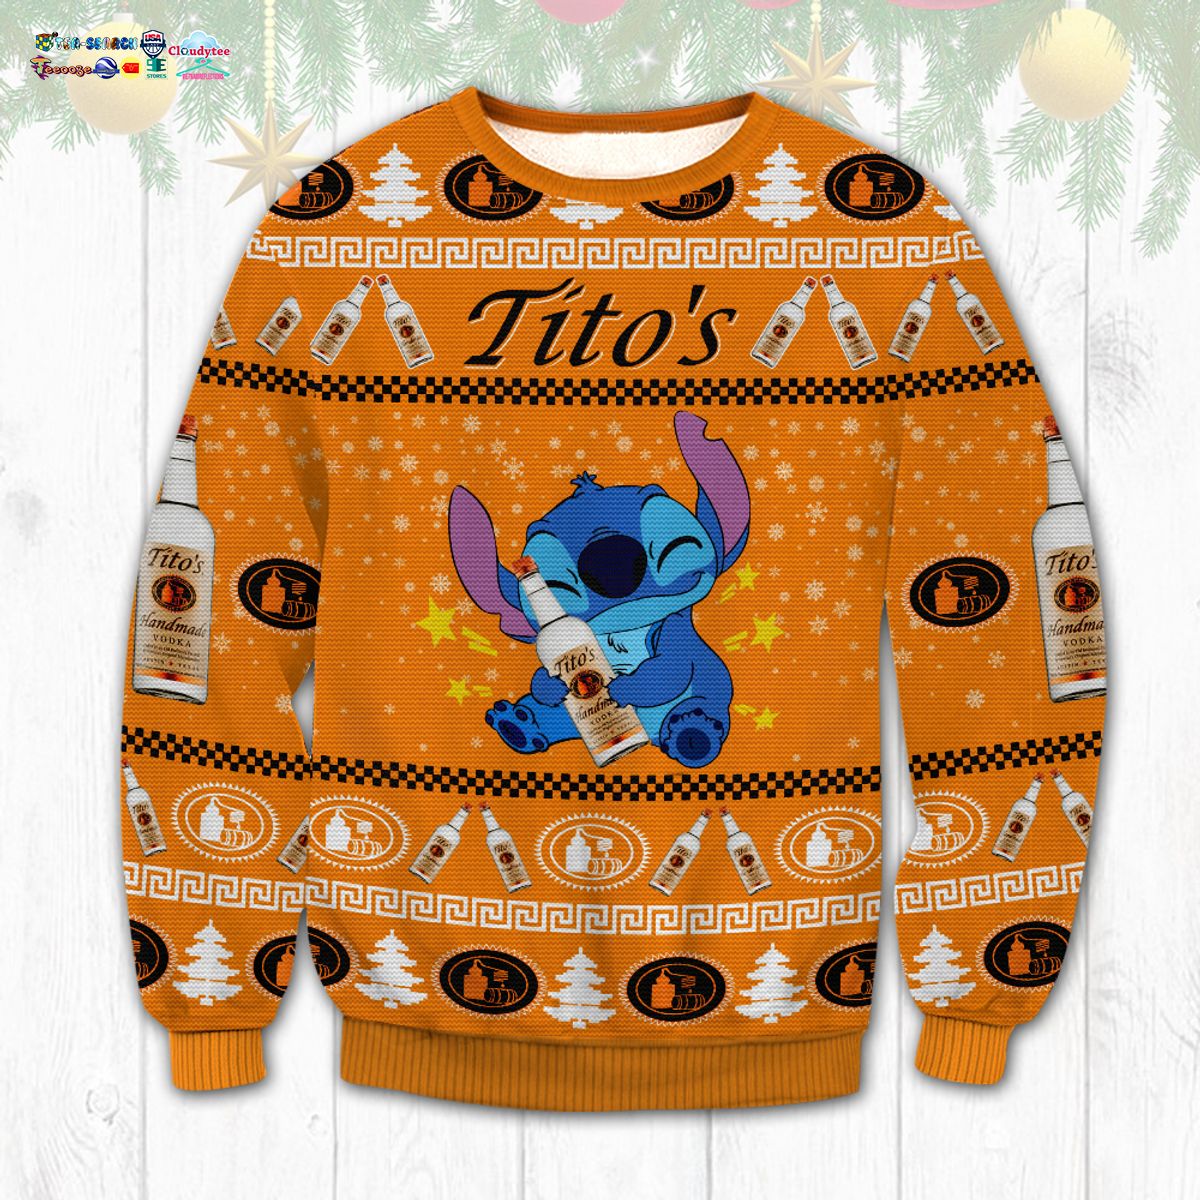 Stitch Hug Tito’s Handmade Vodka Ugly Christmas Sweater